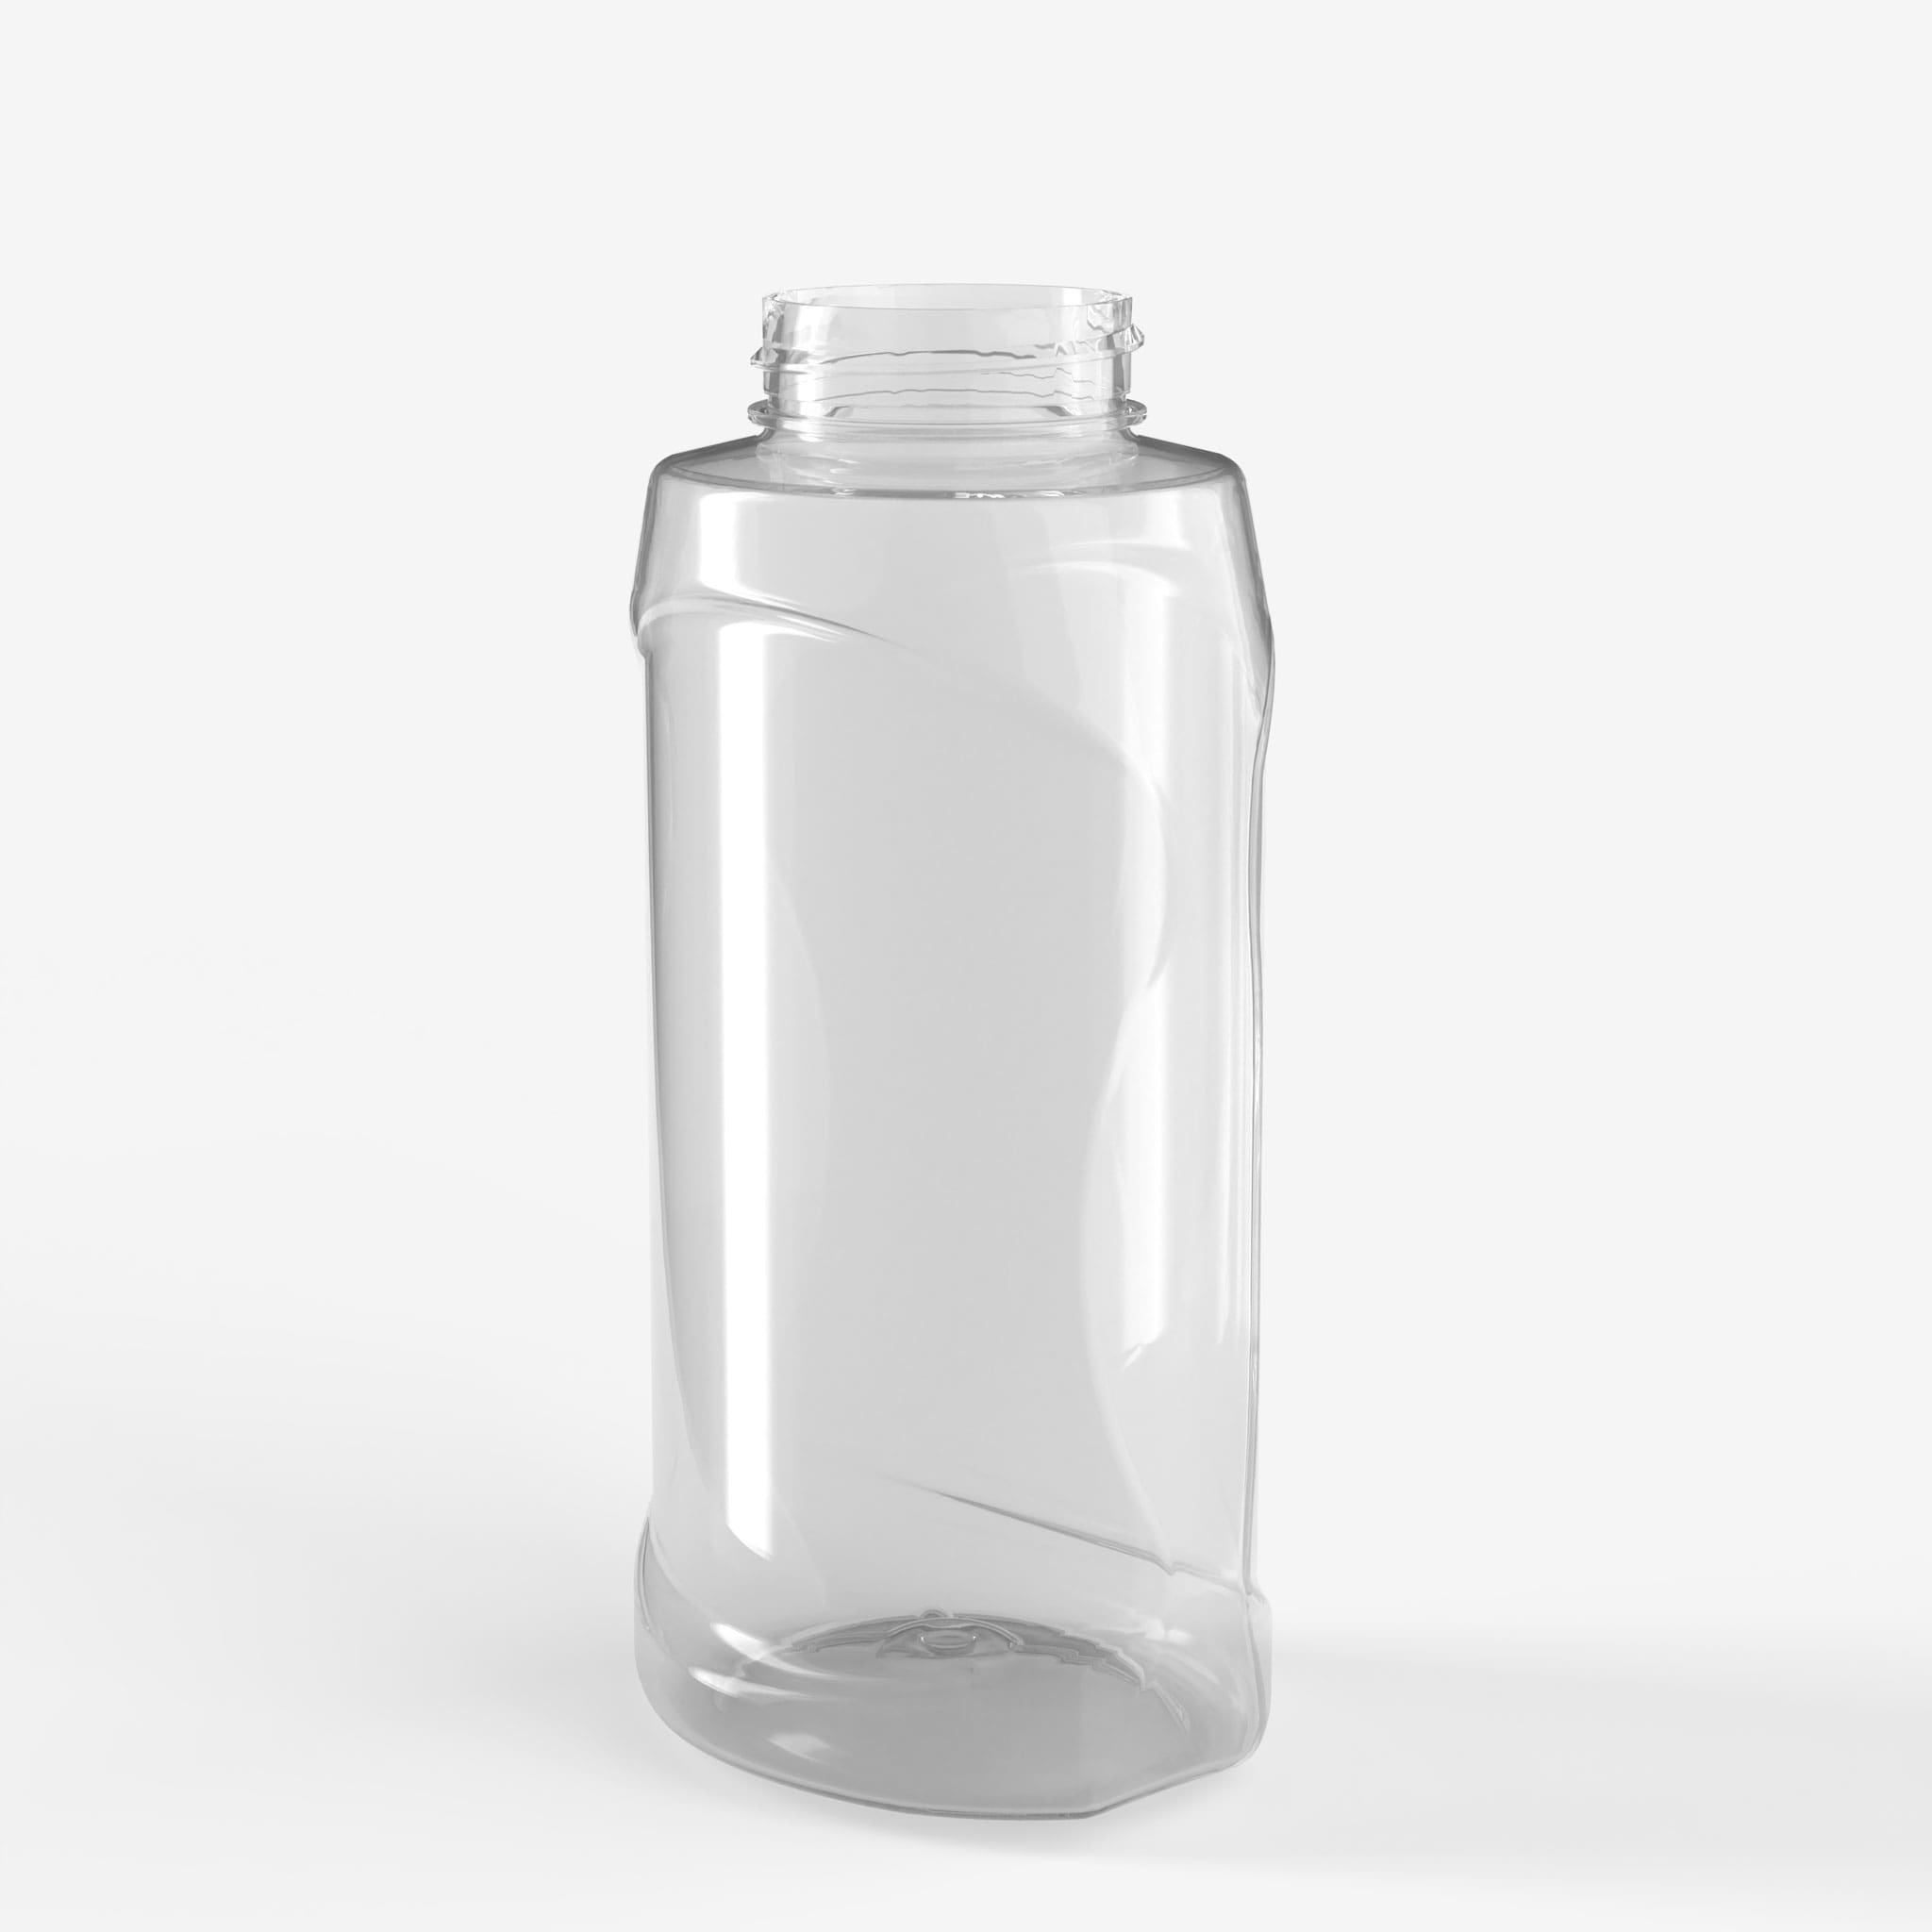 PET-Flasche DELI CF 300 ml zur Kaltabfüllung.